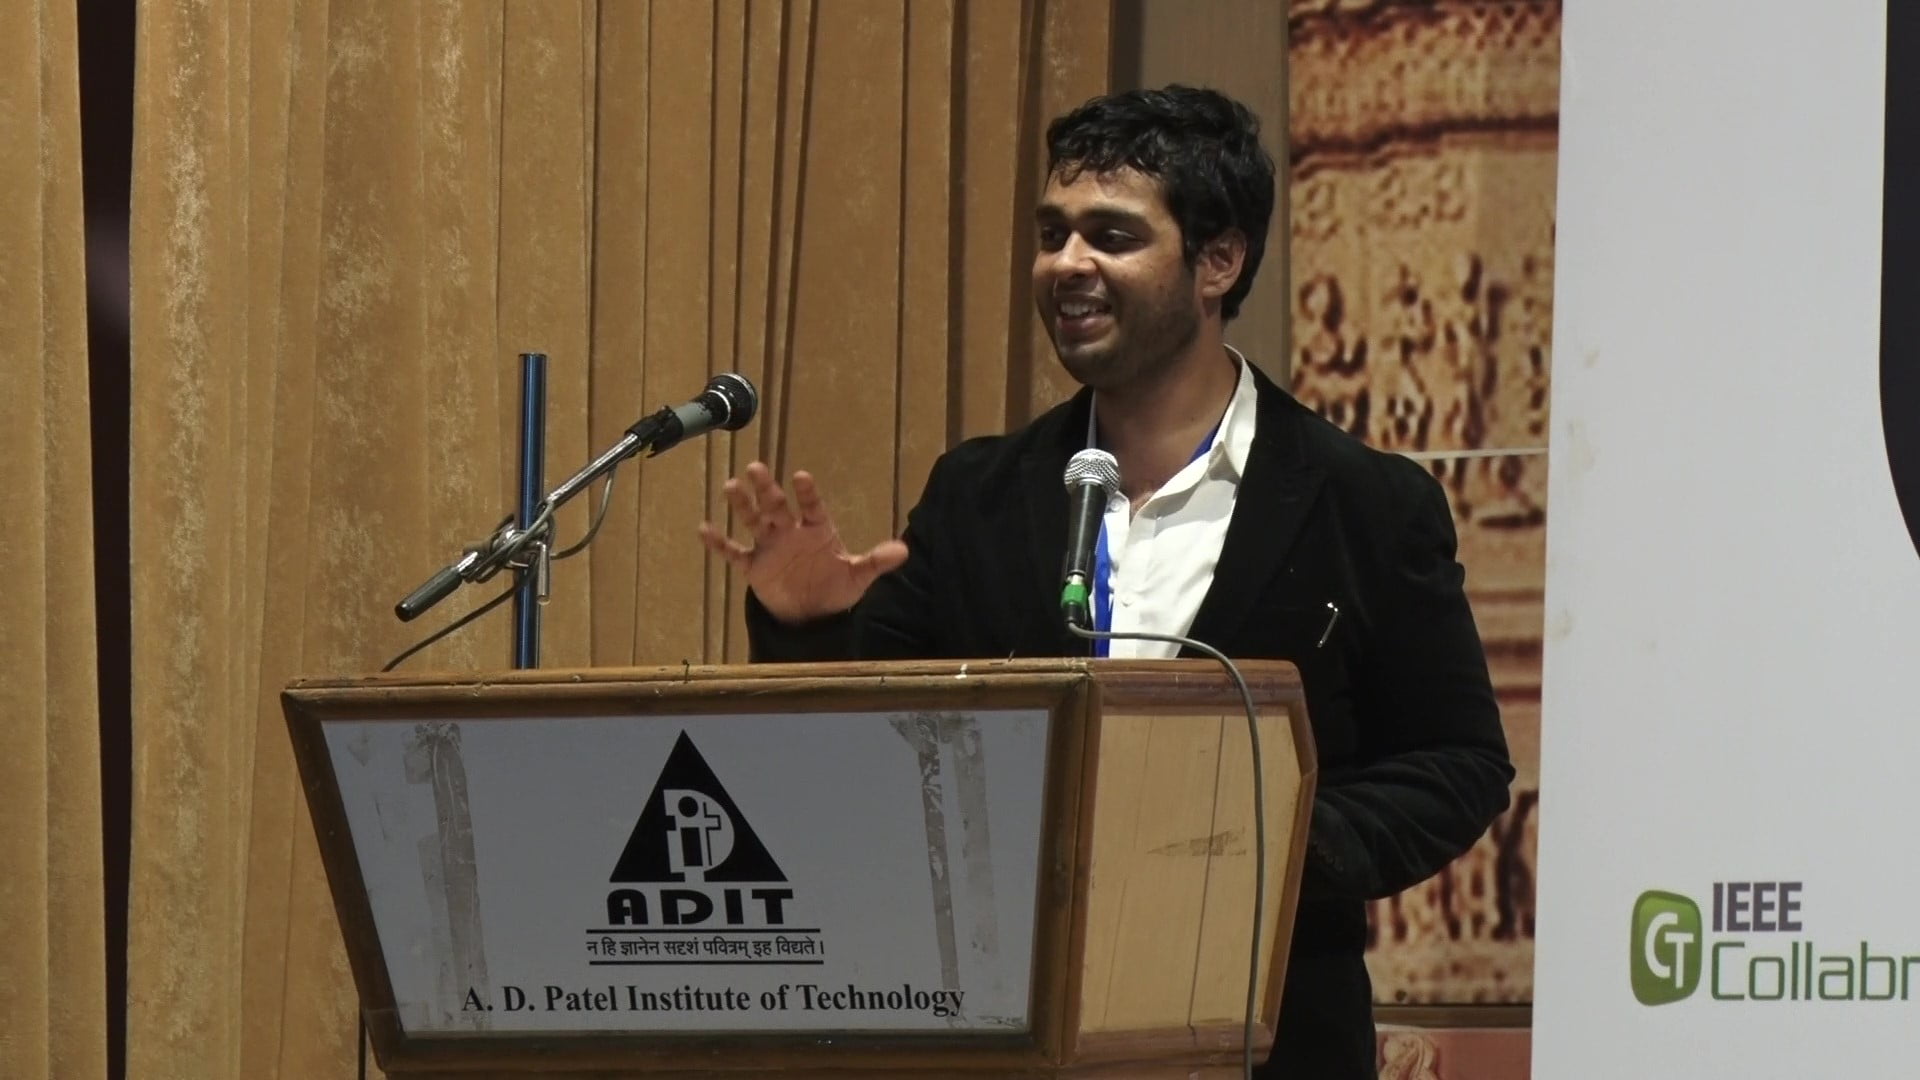 Ankur Borwankar during a motivational speech on storytelling at ADIT, Gujarat, organised by IEEE